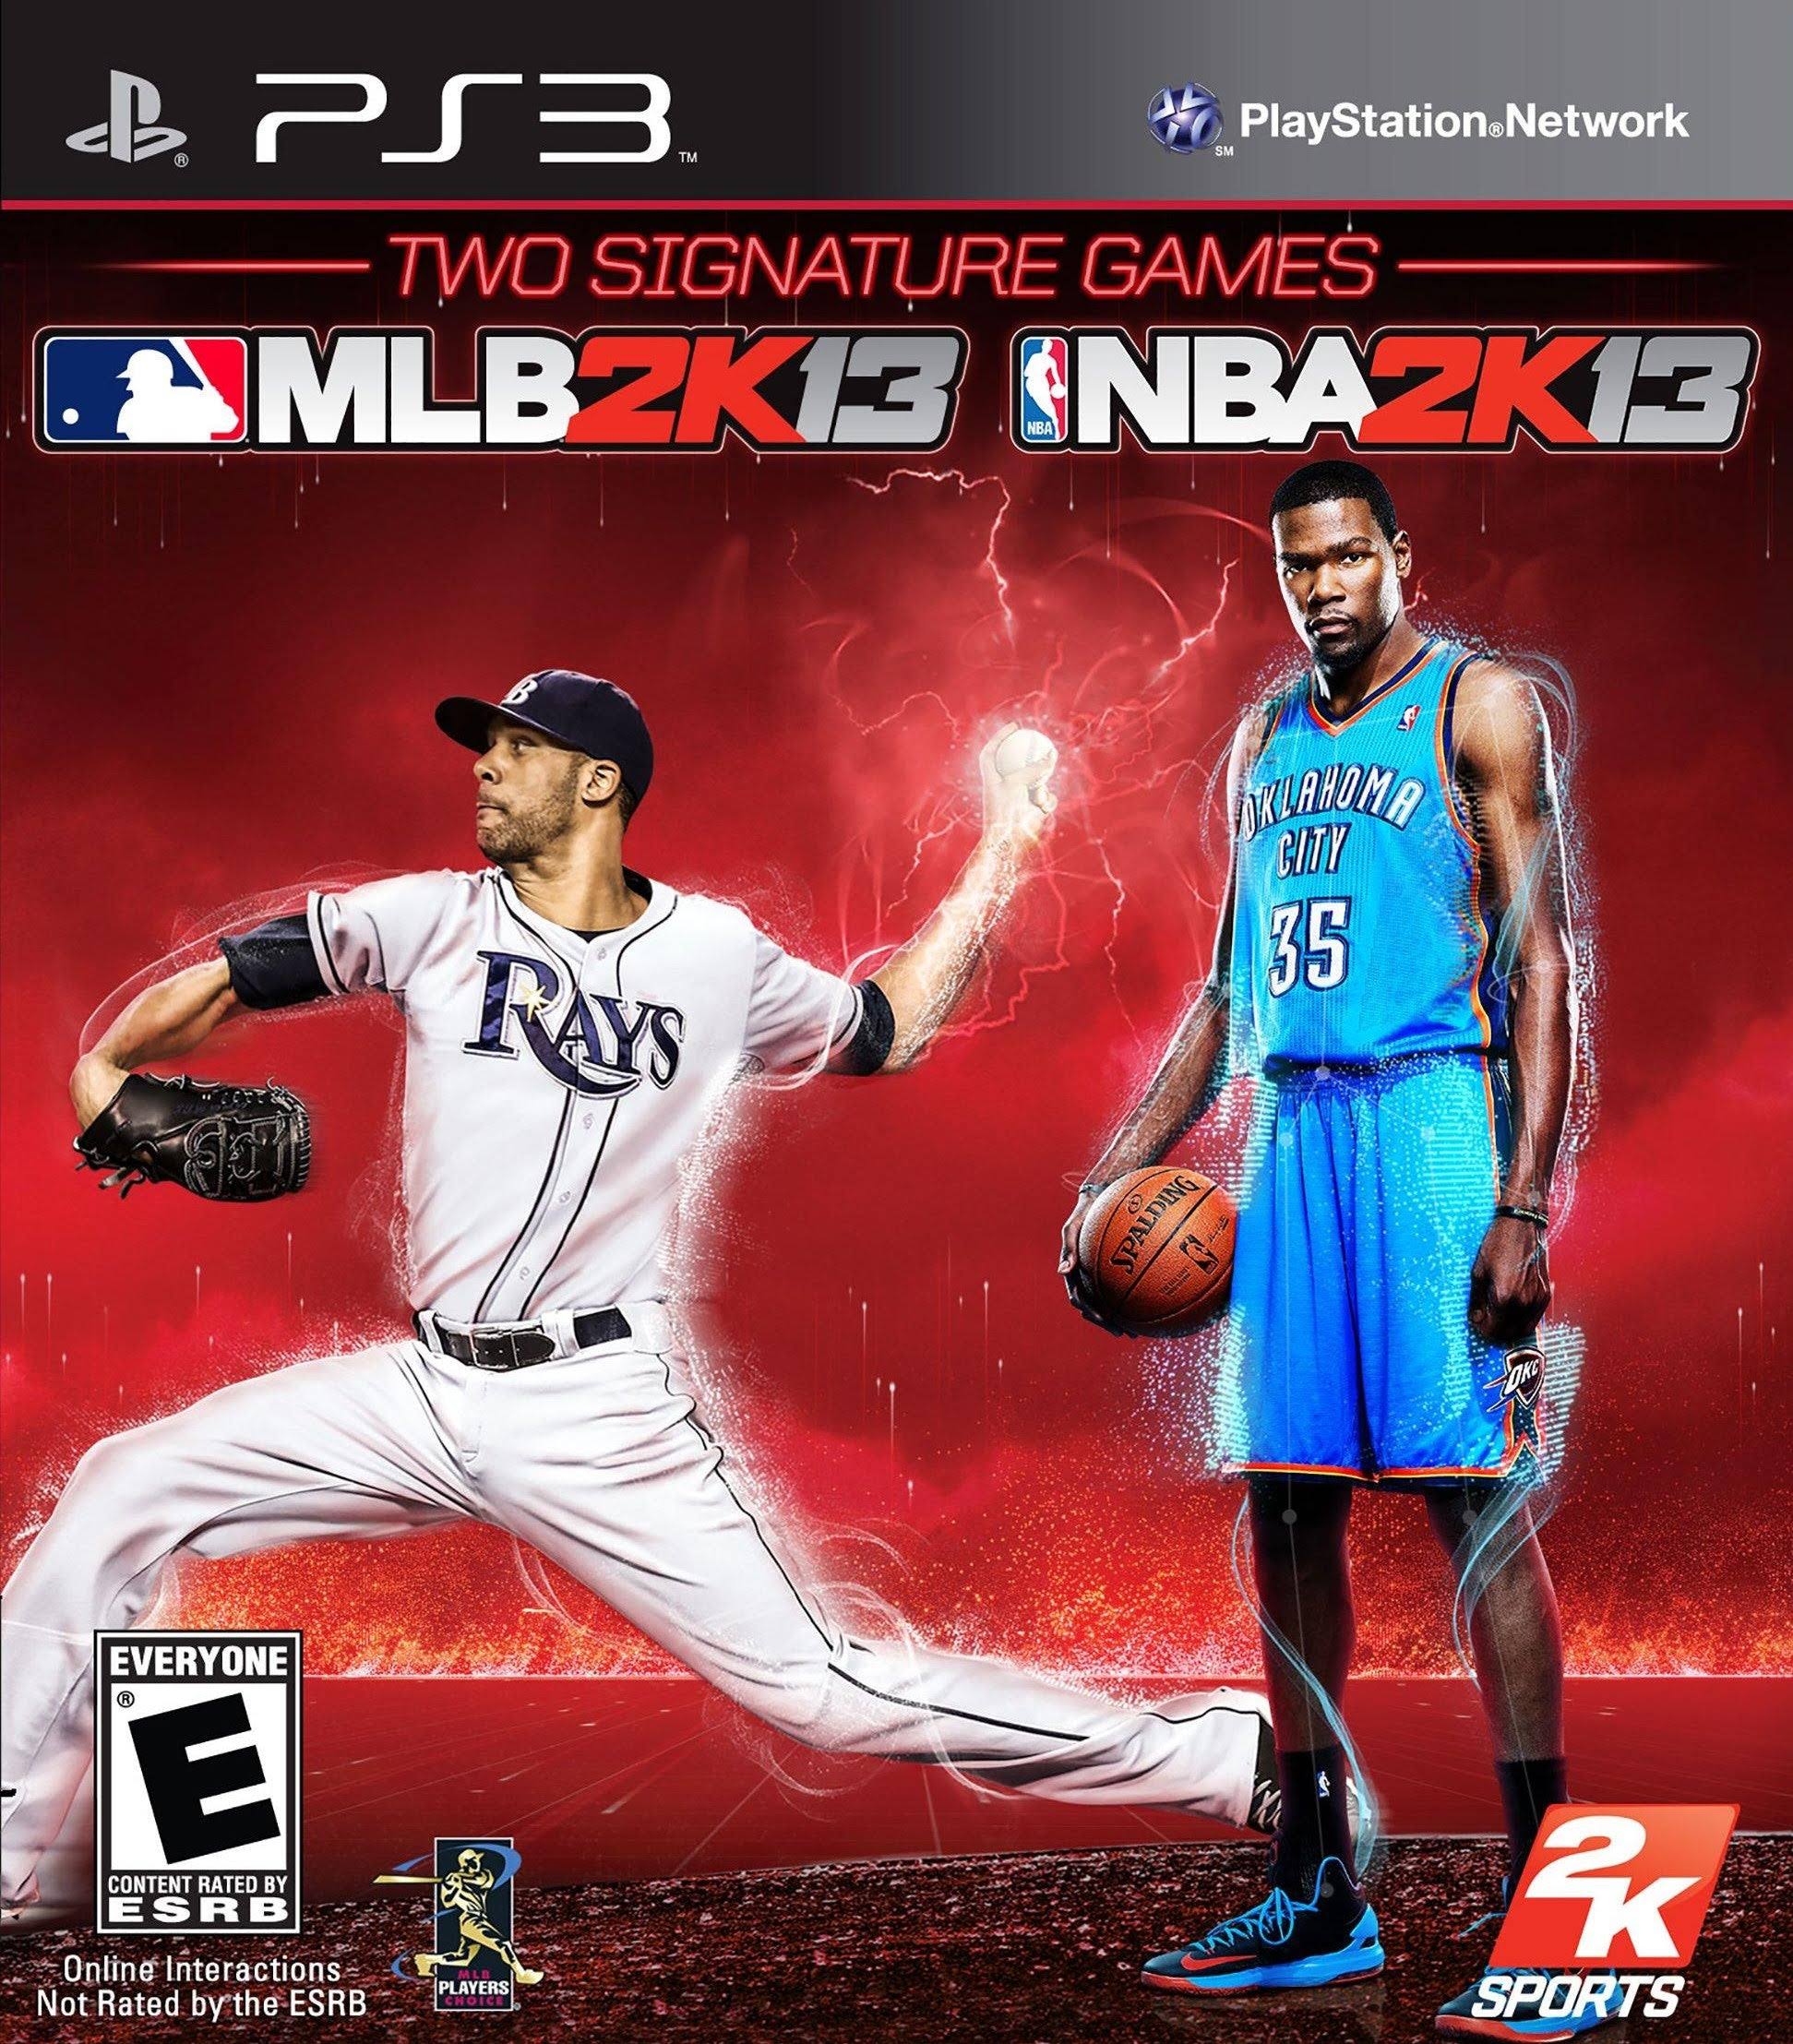 MLB 2K13 and NBA 2K13 - Play Station 3